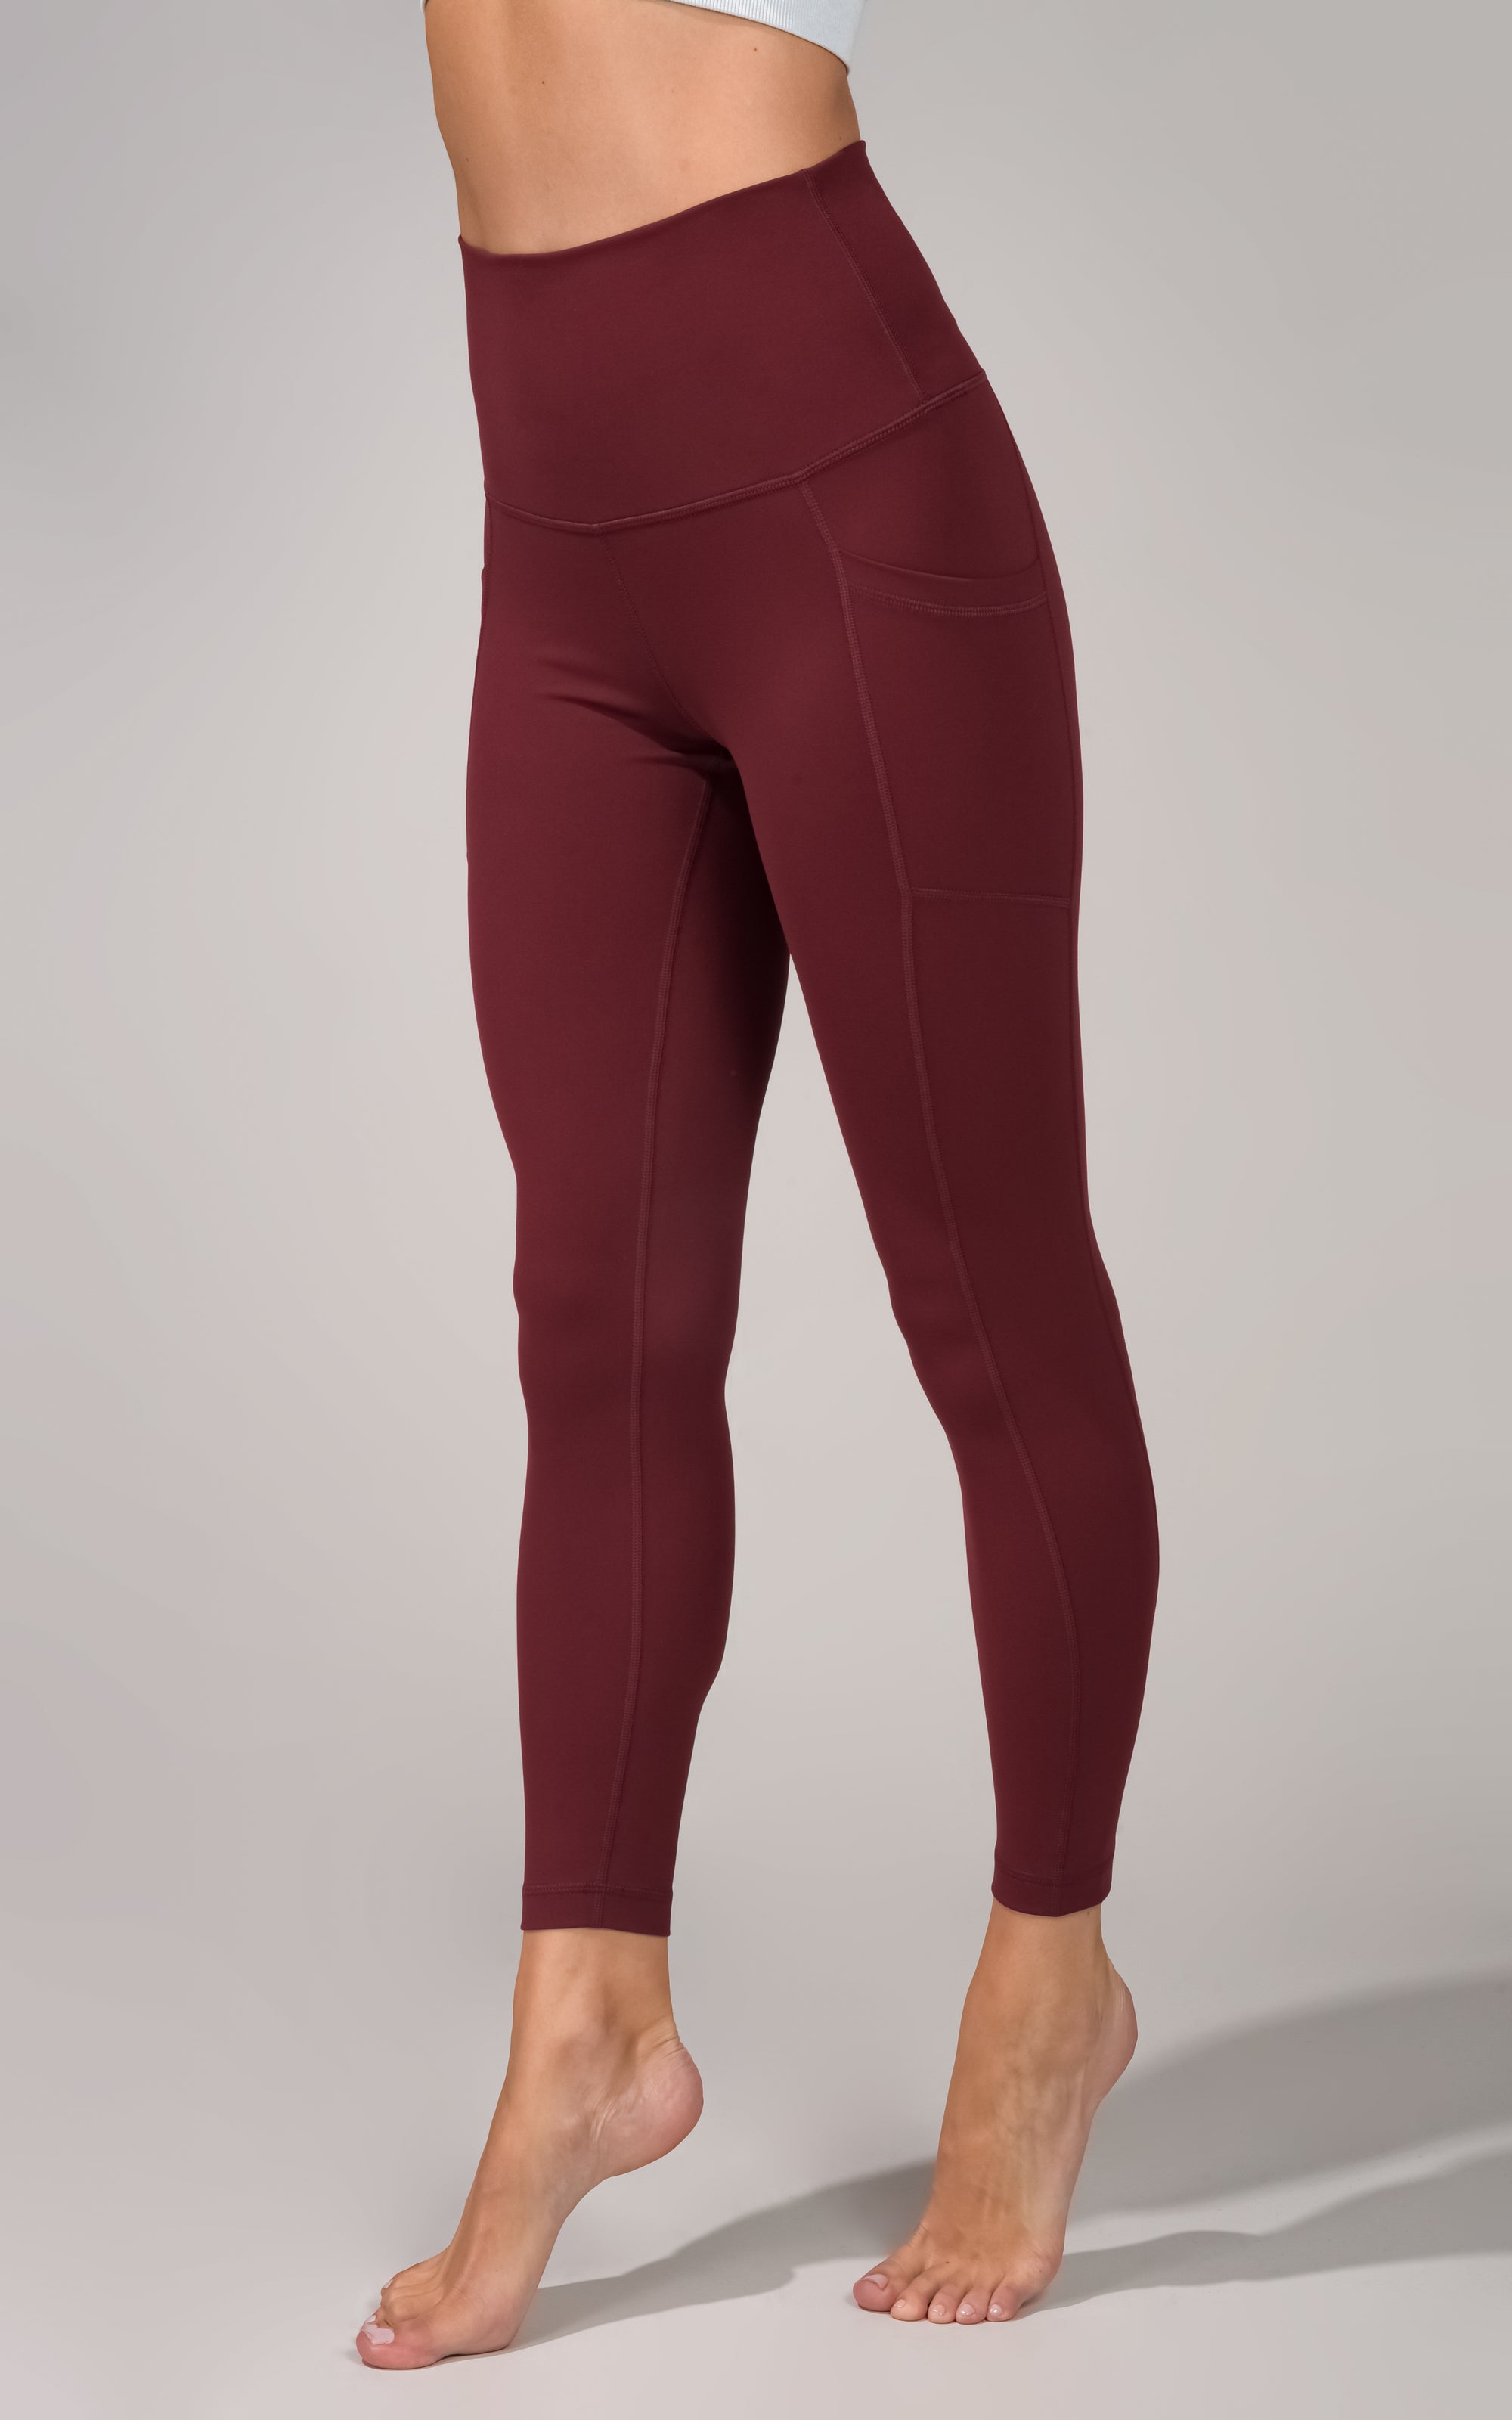 Yogalicious - Women's High Waist Side Pocket 7/8 Ankle Legging - Earth Red  - Medium : Target